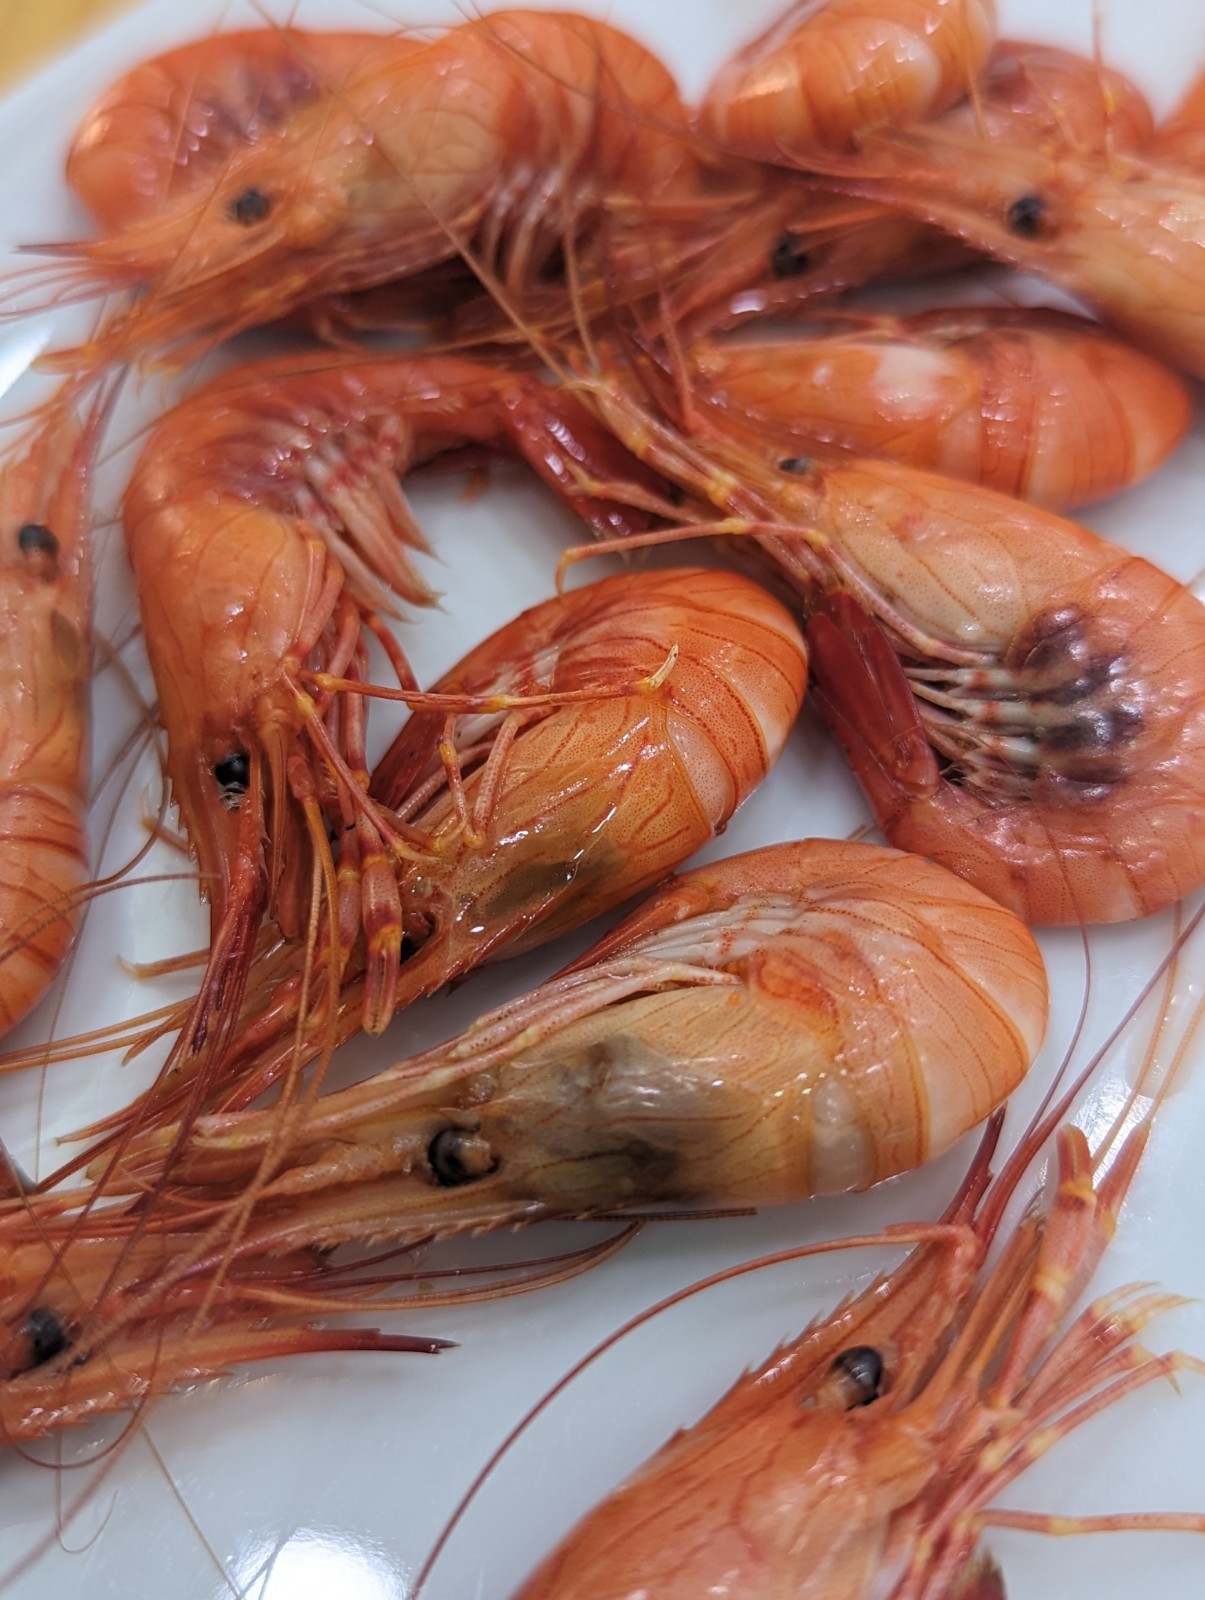 a pile of shrimp on a plate